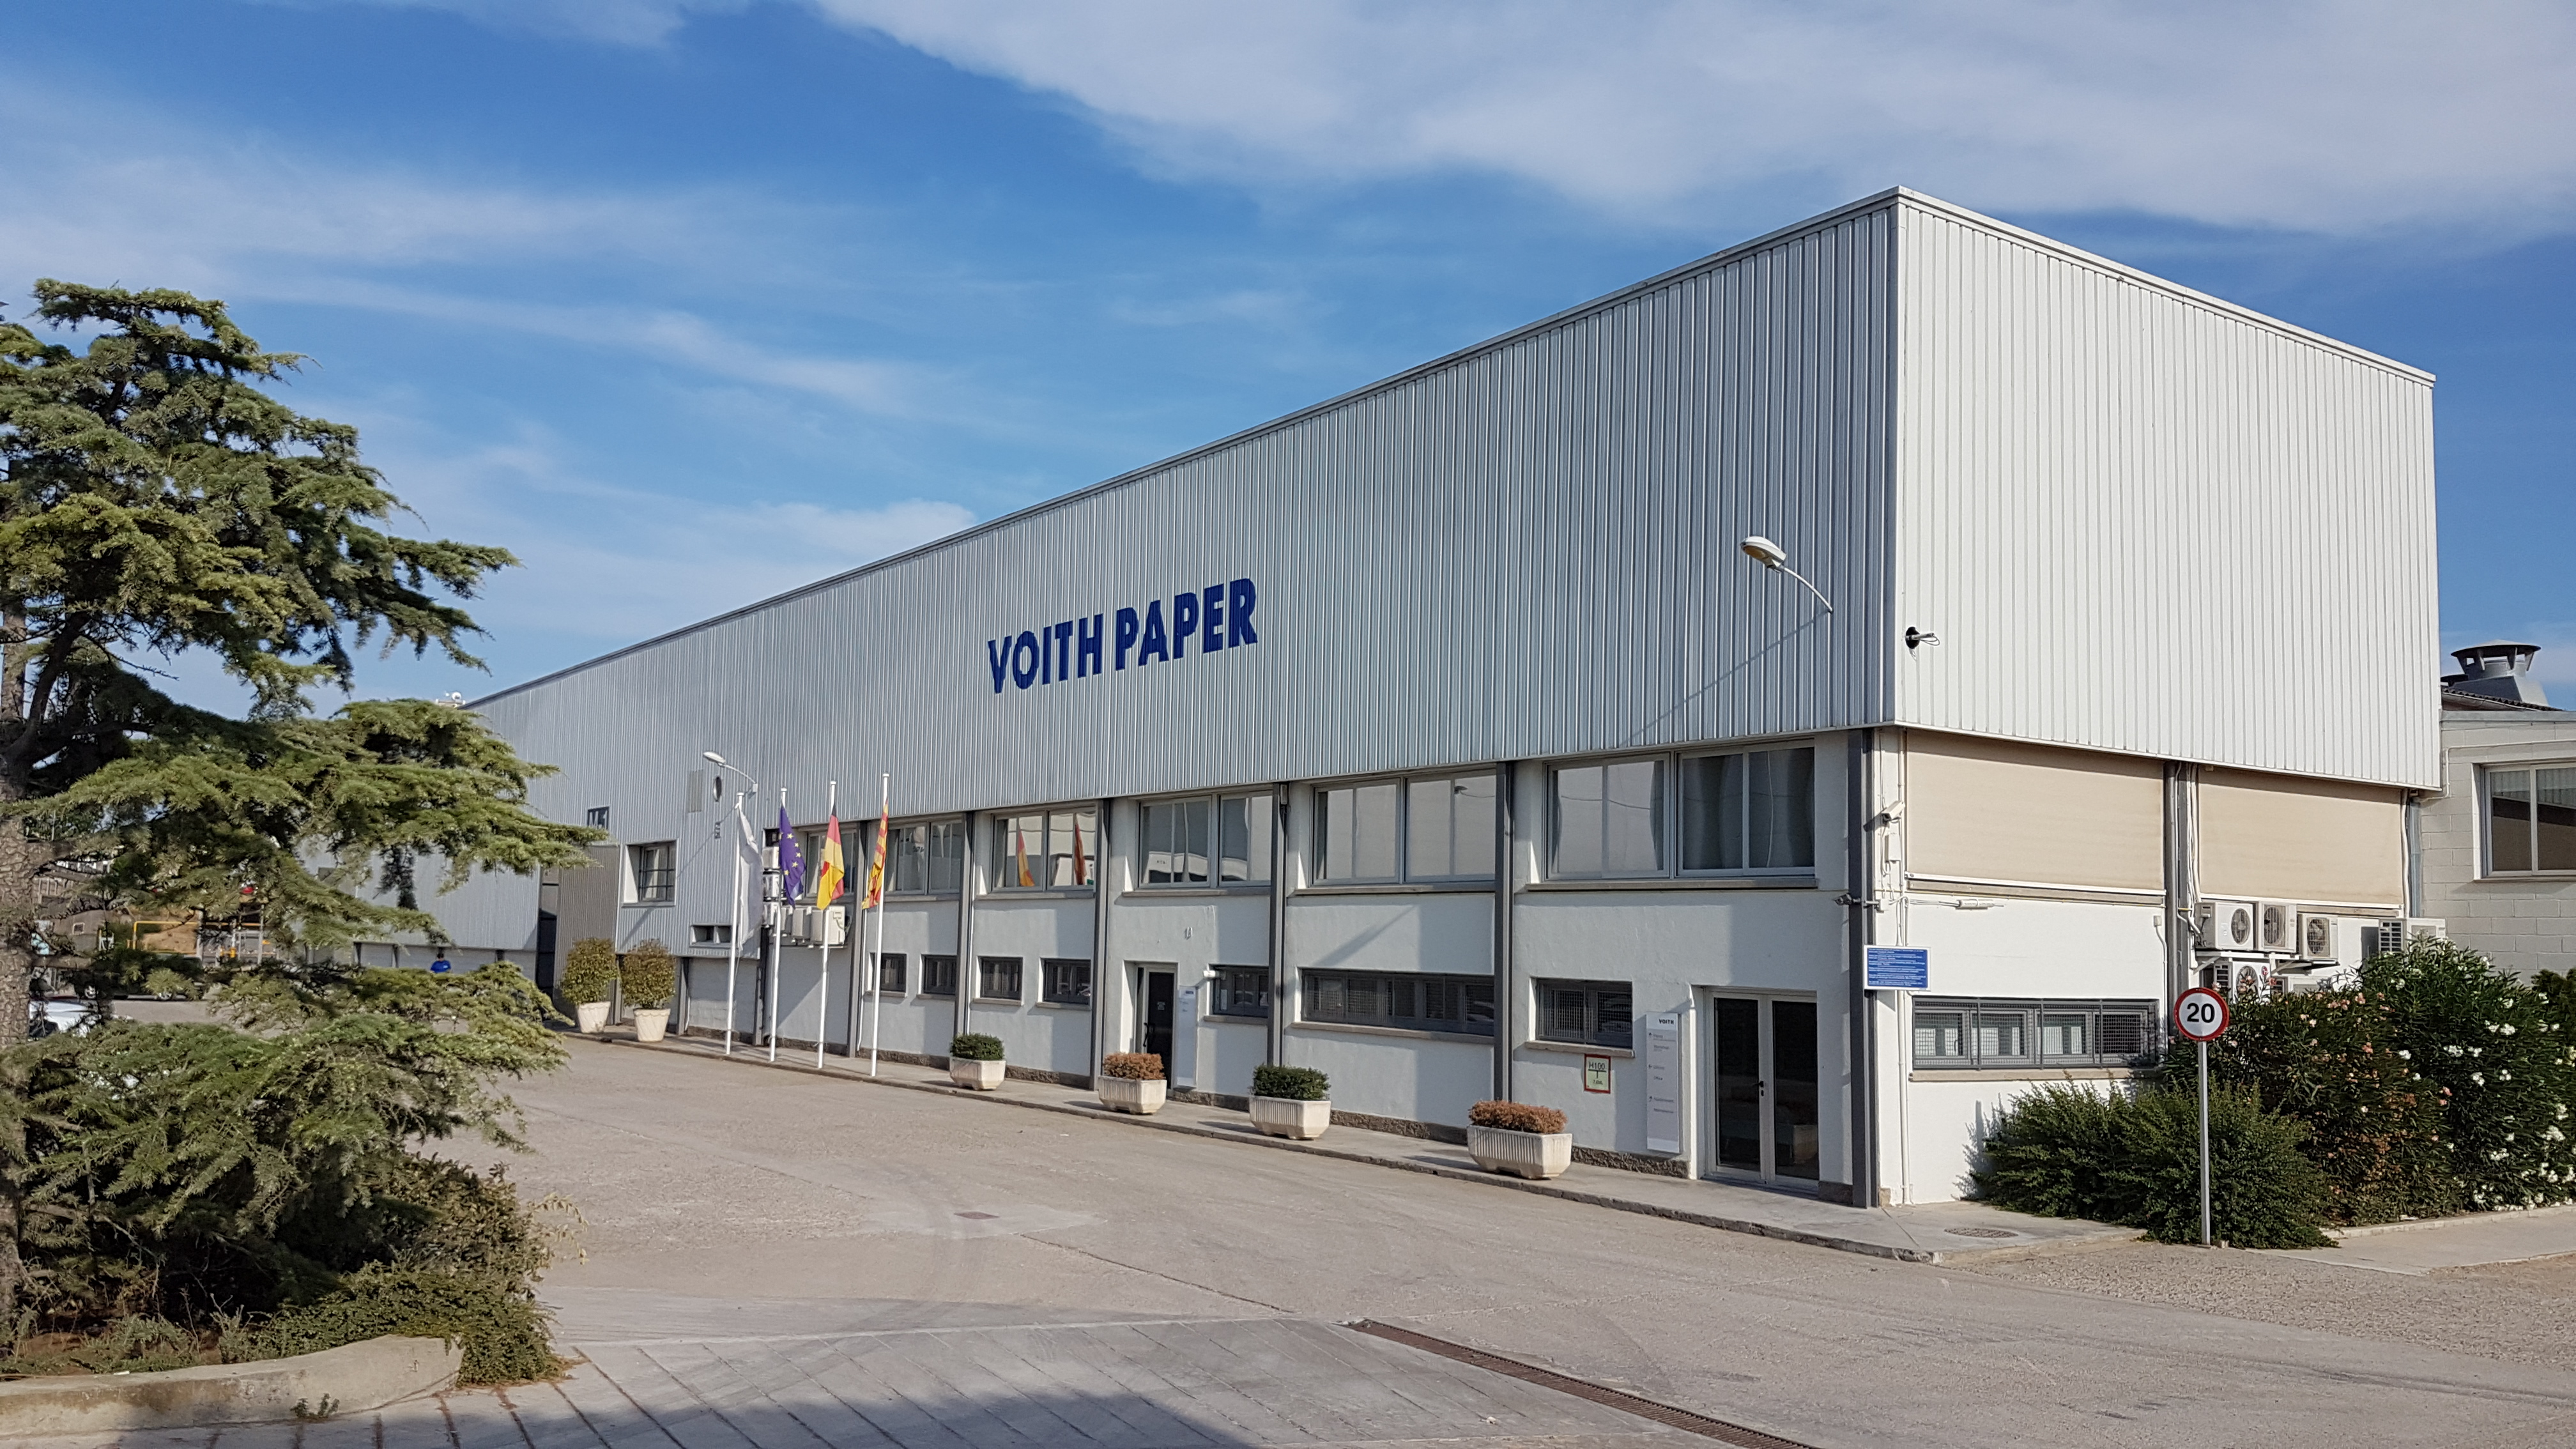 façana edifici fàbrica Voith Paper a Guissona